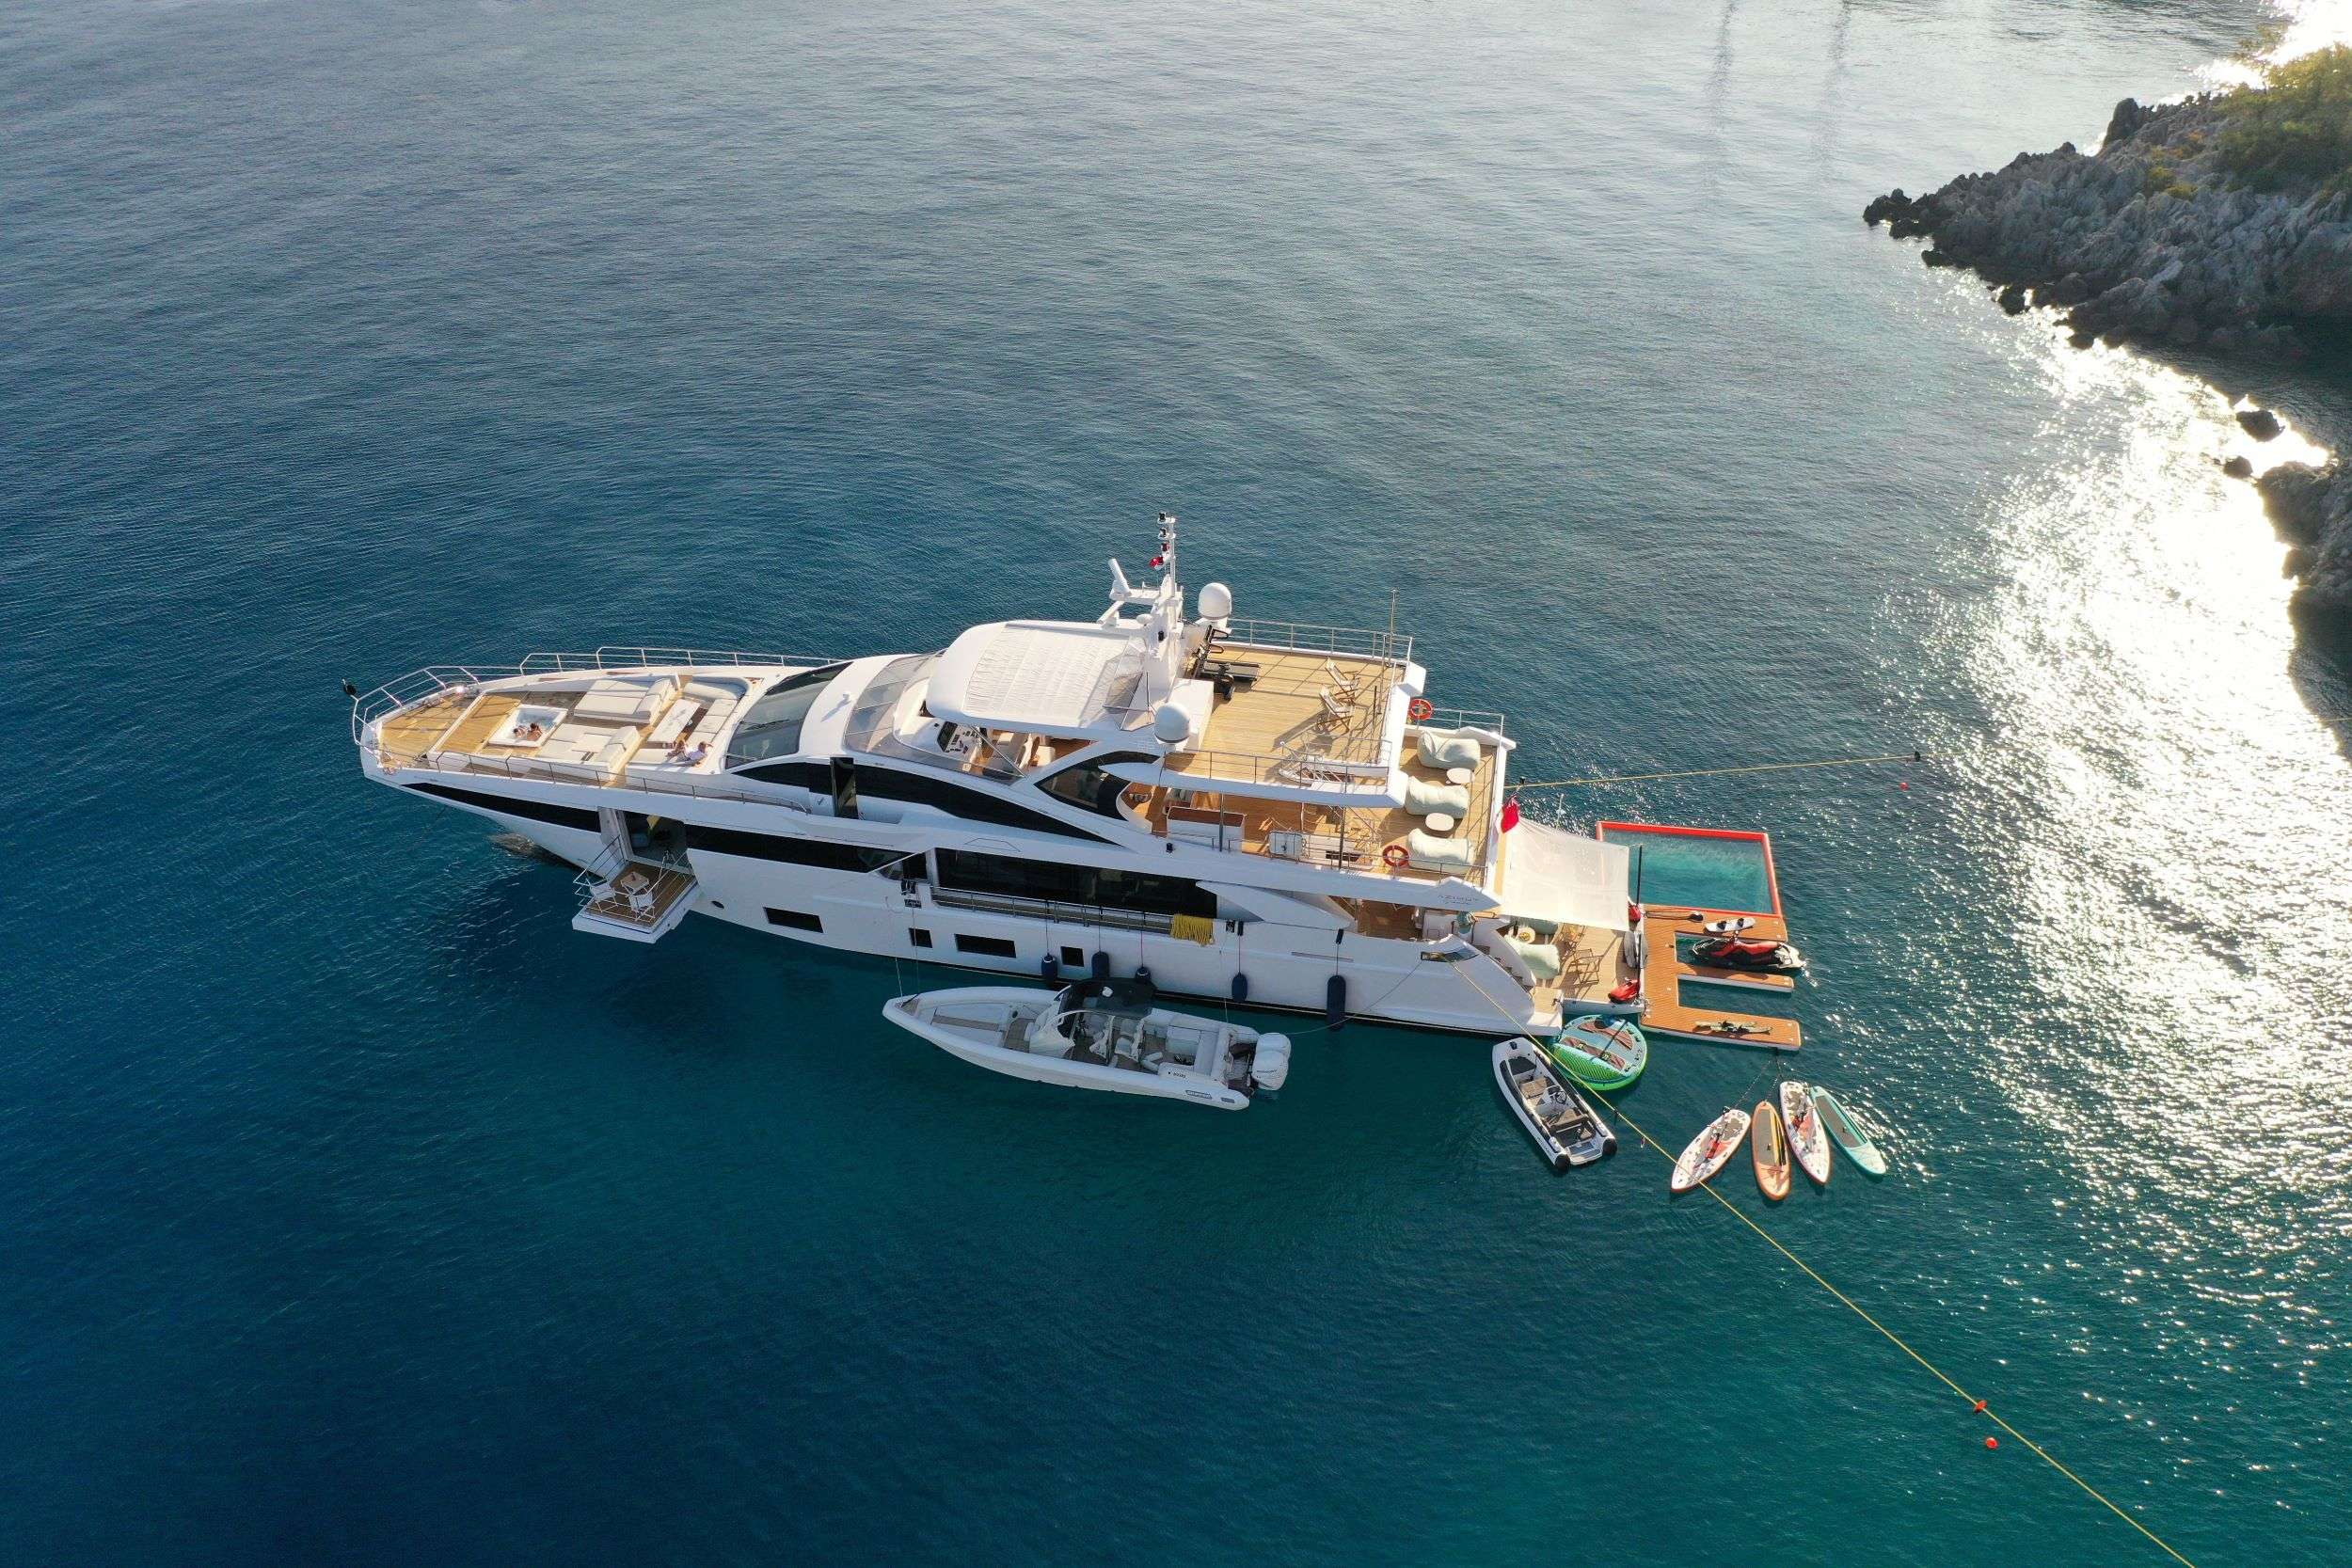 LOVE T - Motor Boat Charter Sicily & Boat hire in Summer: Greece | Winter: W. Med -Naples/Sicily 1